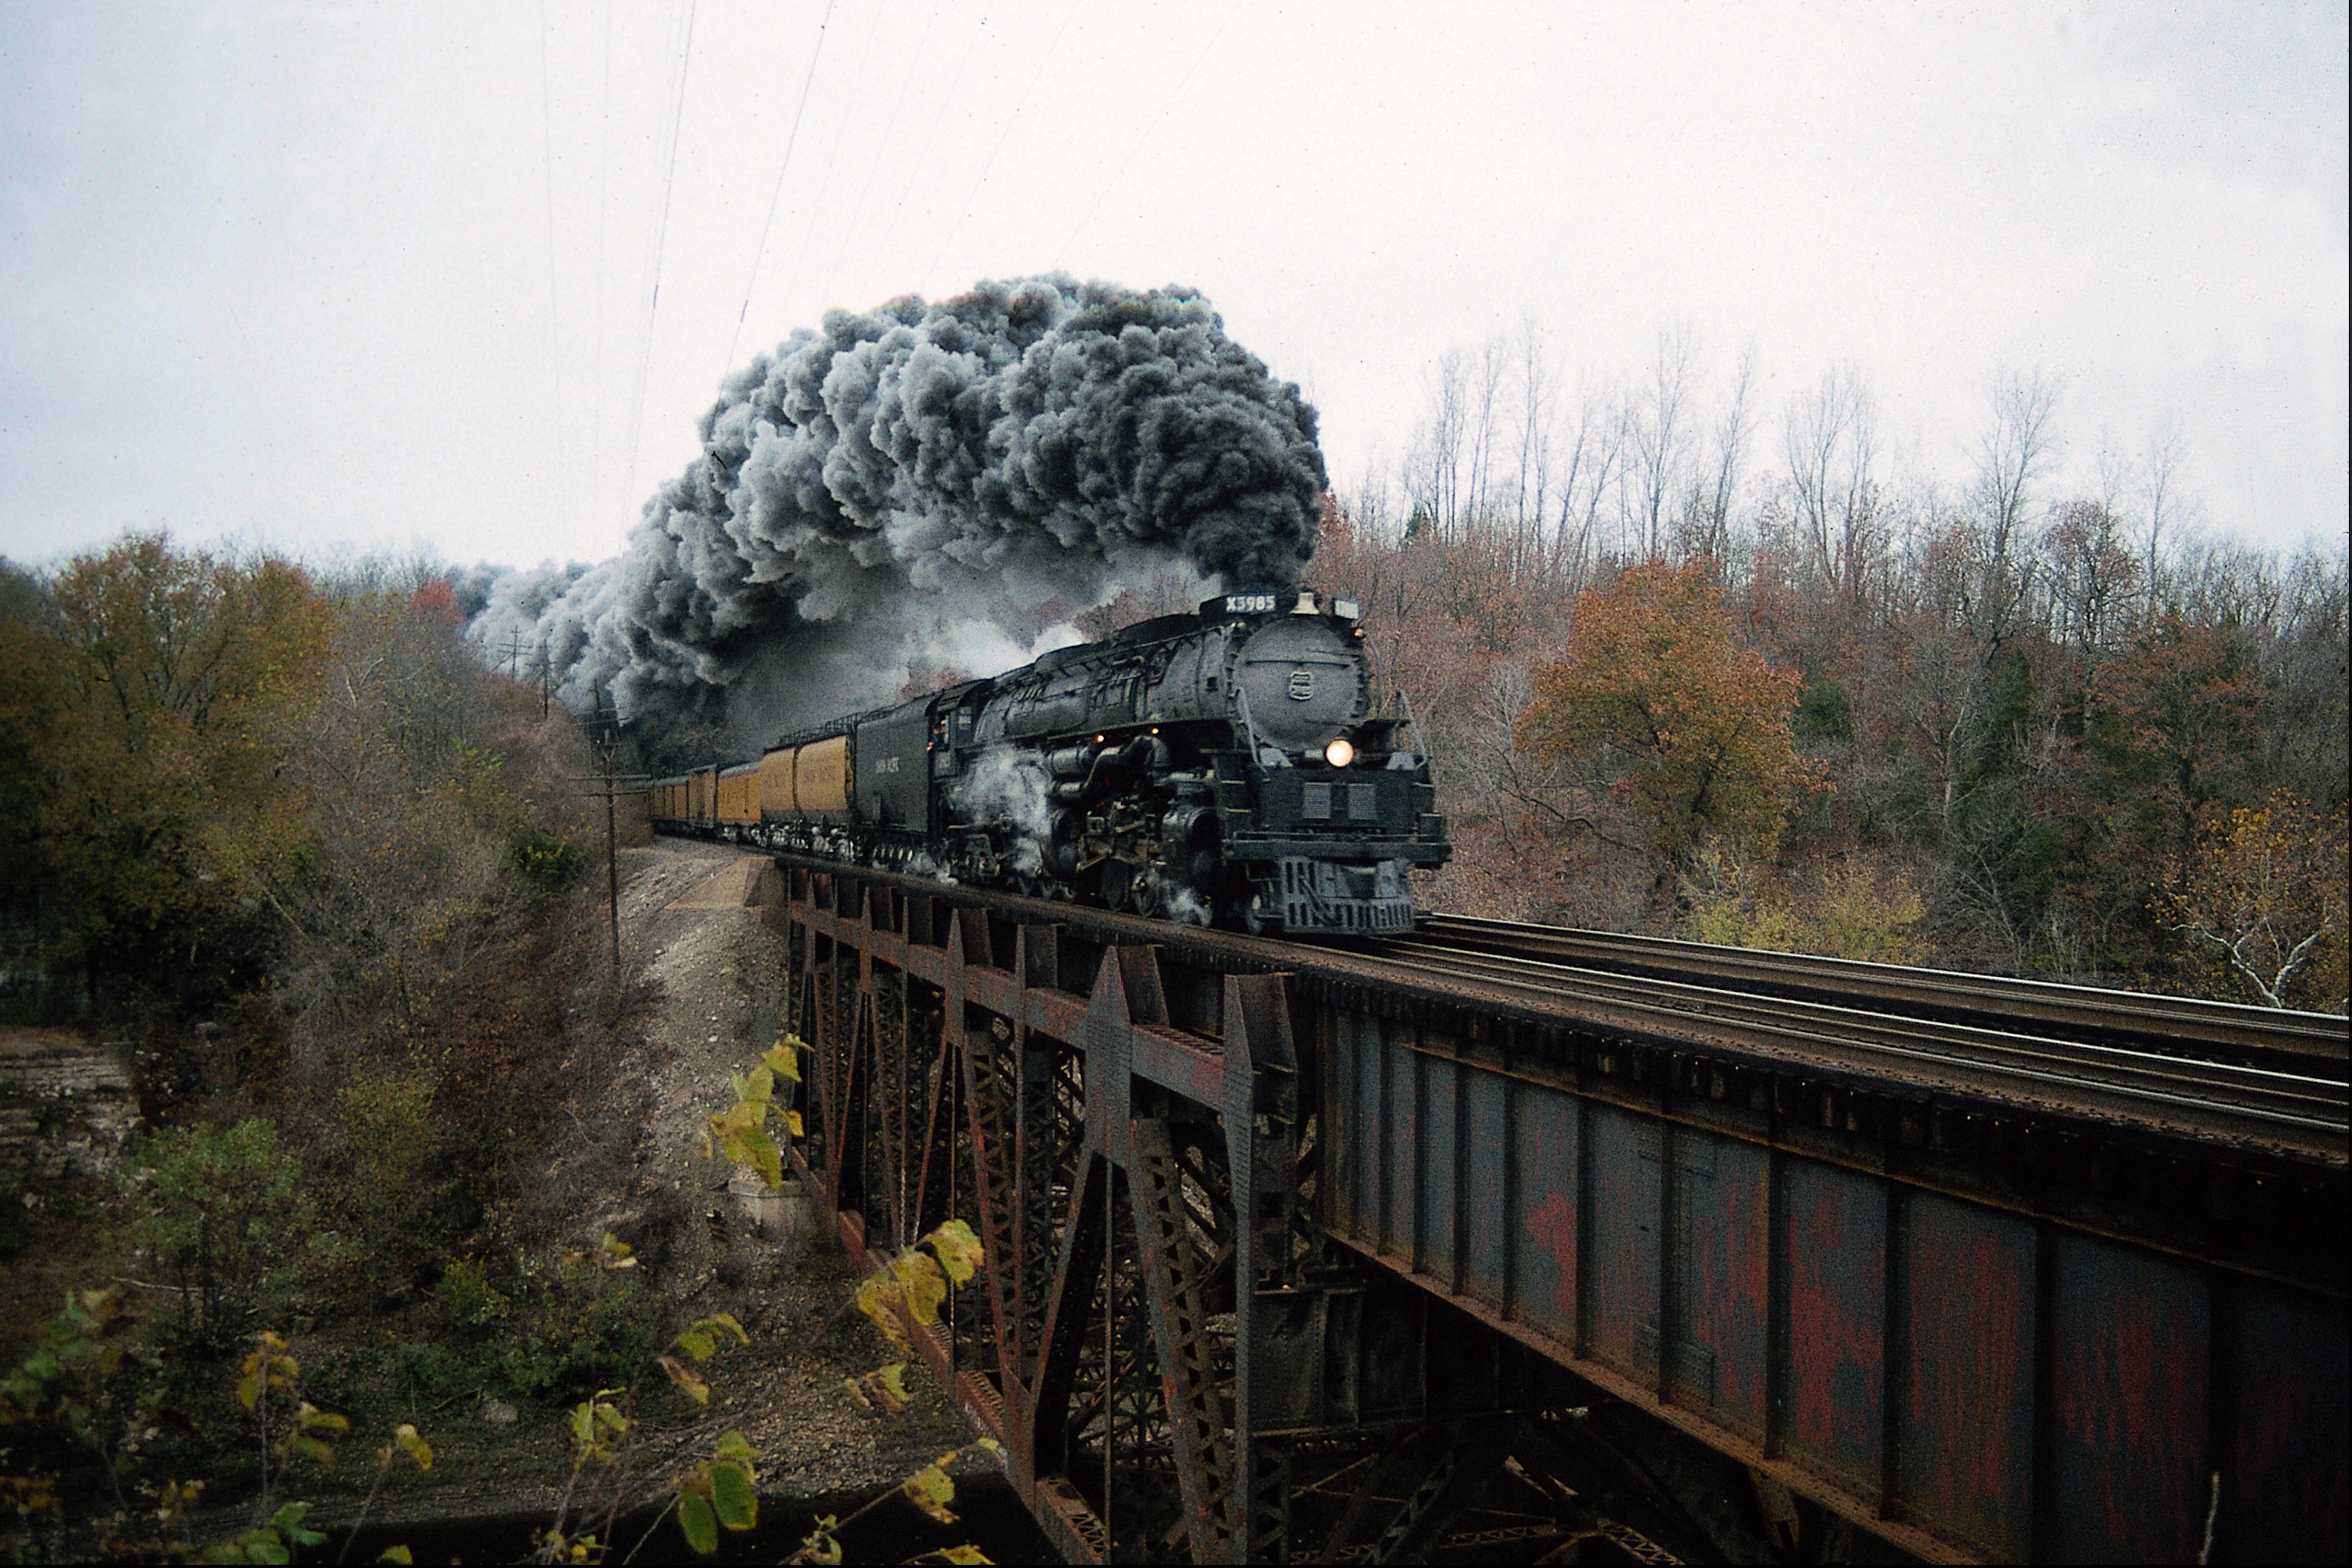 Union Pacific 3985, a majestic steam train locomotive, against a scenic background.